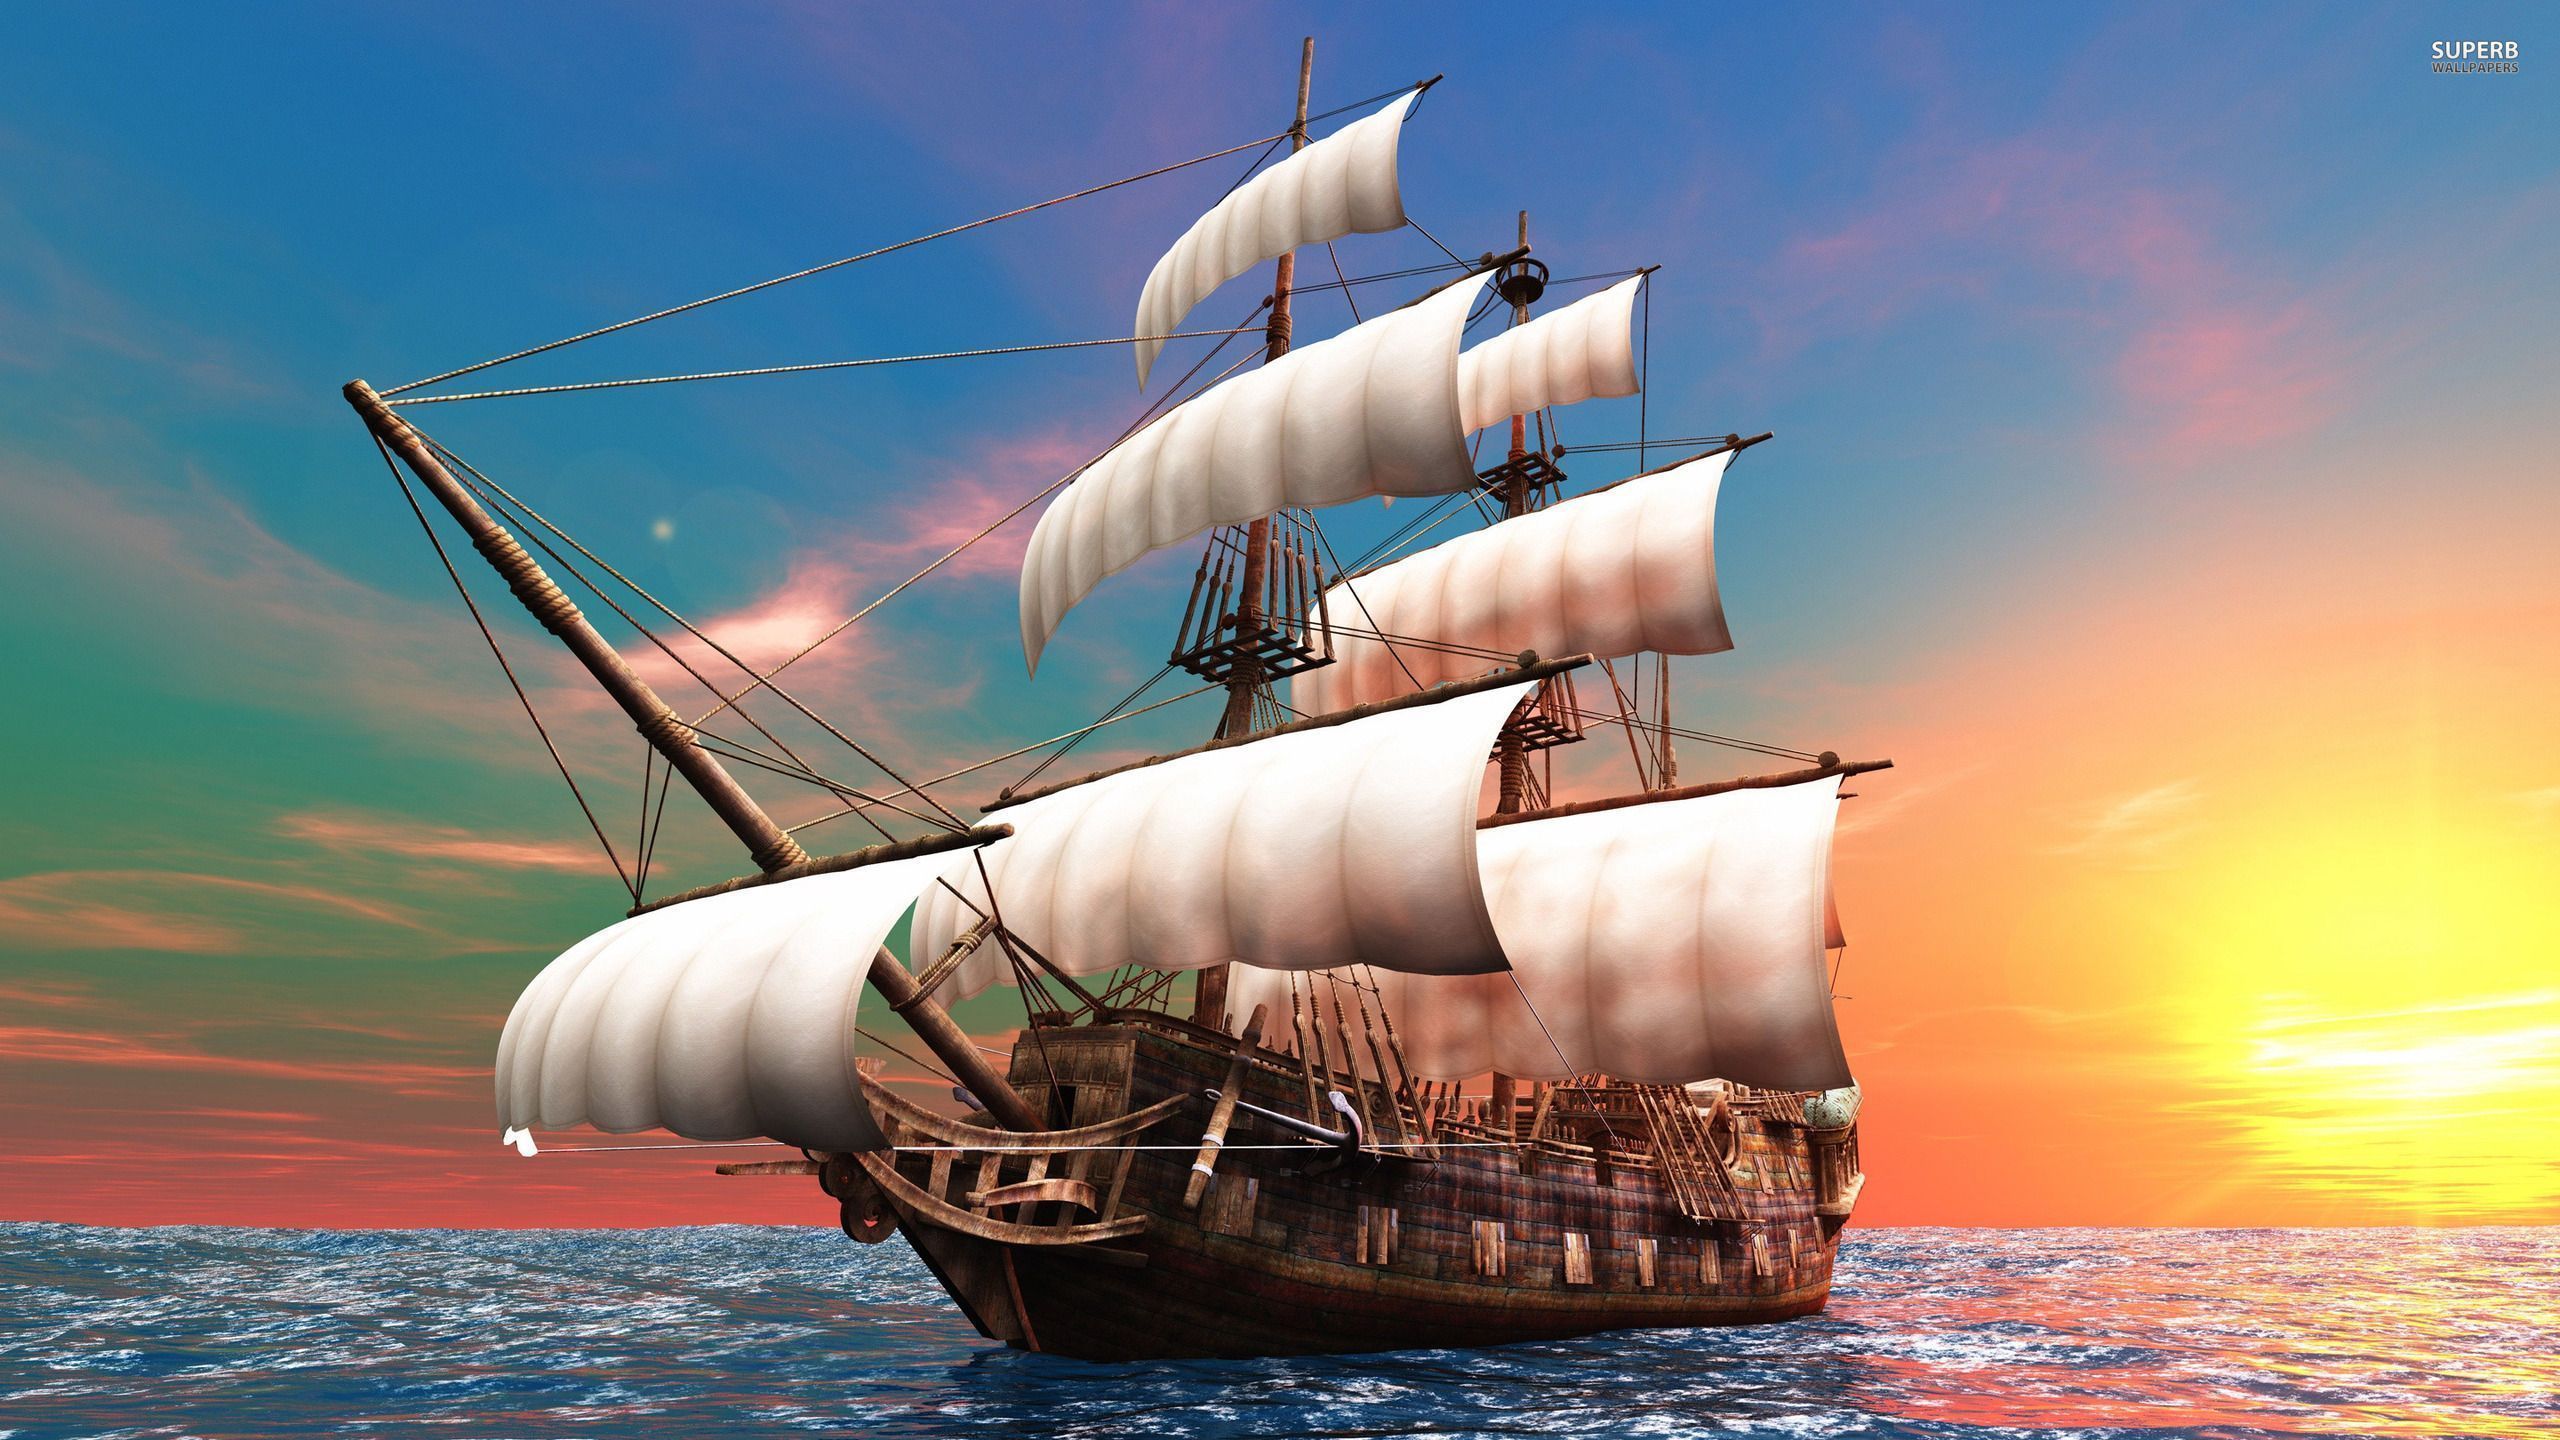 Pirate ship : Desktop and mobile wallpaper : Wallippo